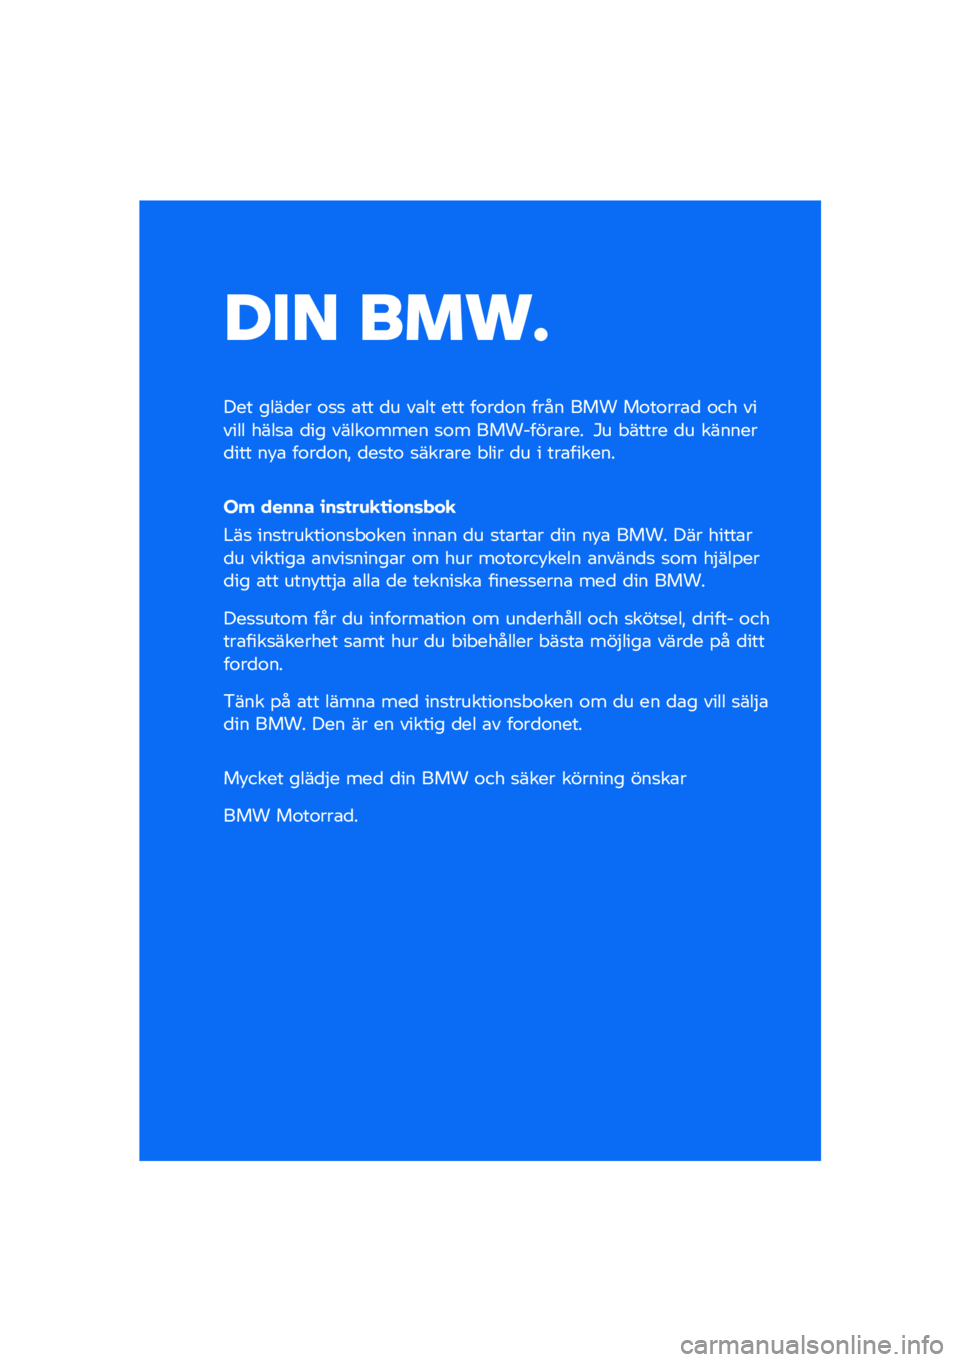 BMW MOTORRAD M 1000 RR 2021  Instruktionsbok (in Swedish) ��� ����\b
��� ����
�� �\f�
�
 �\b�� �
� ��\b�� ��� ��\f��
�\f� ���� ��� ��\f��\f���\b�
 �\f�� ������ ����
�\b �
�� �����\f���� �
�\f� ���